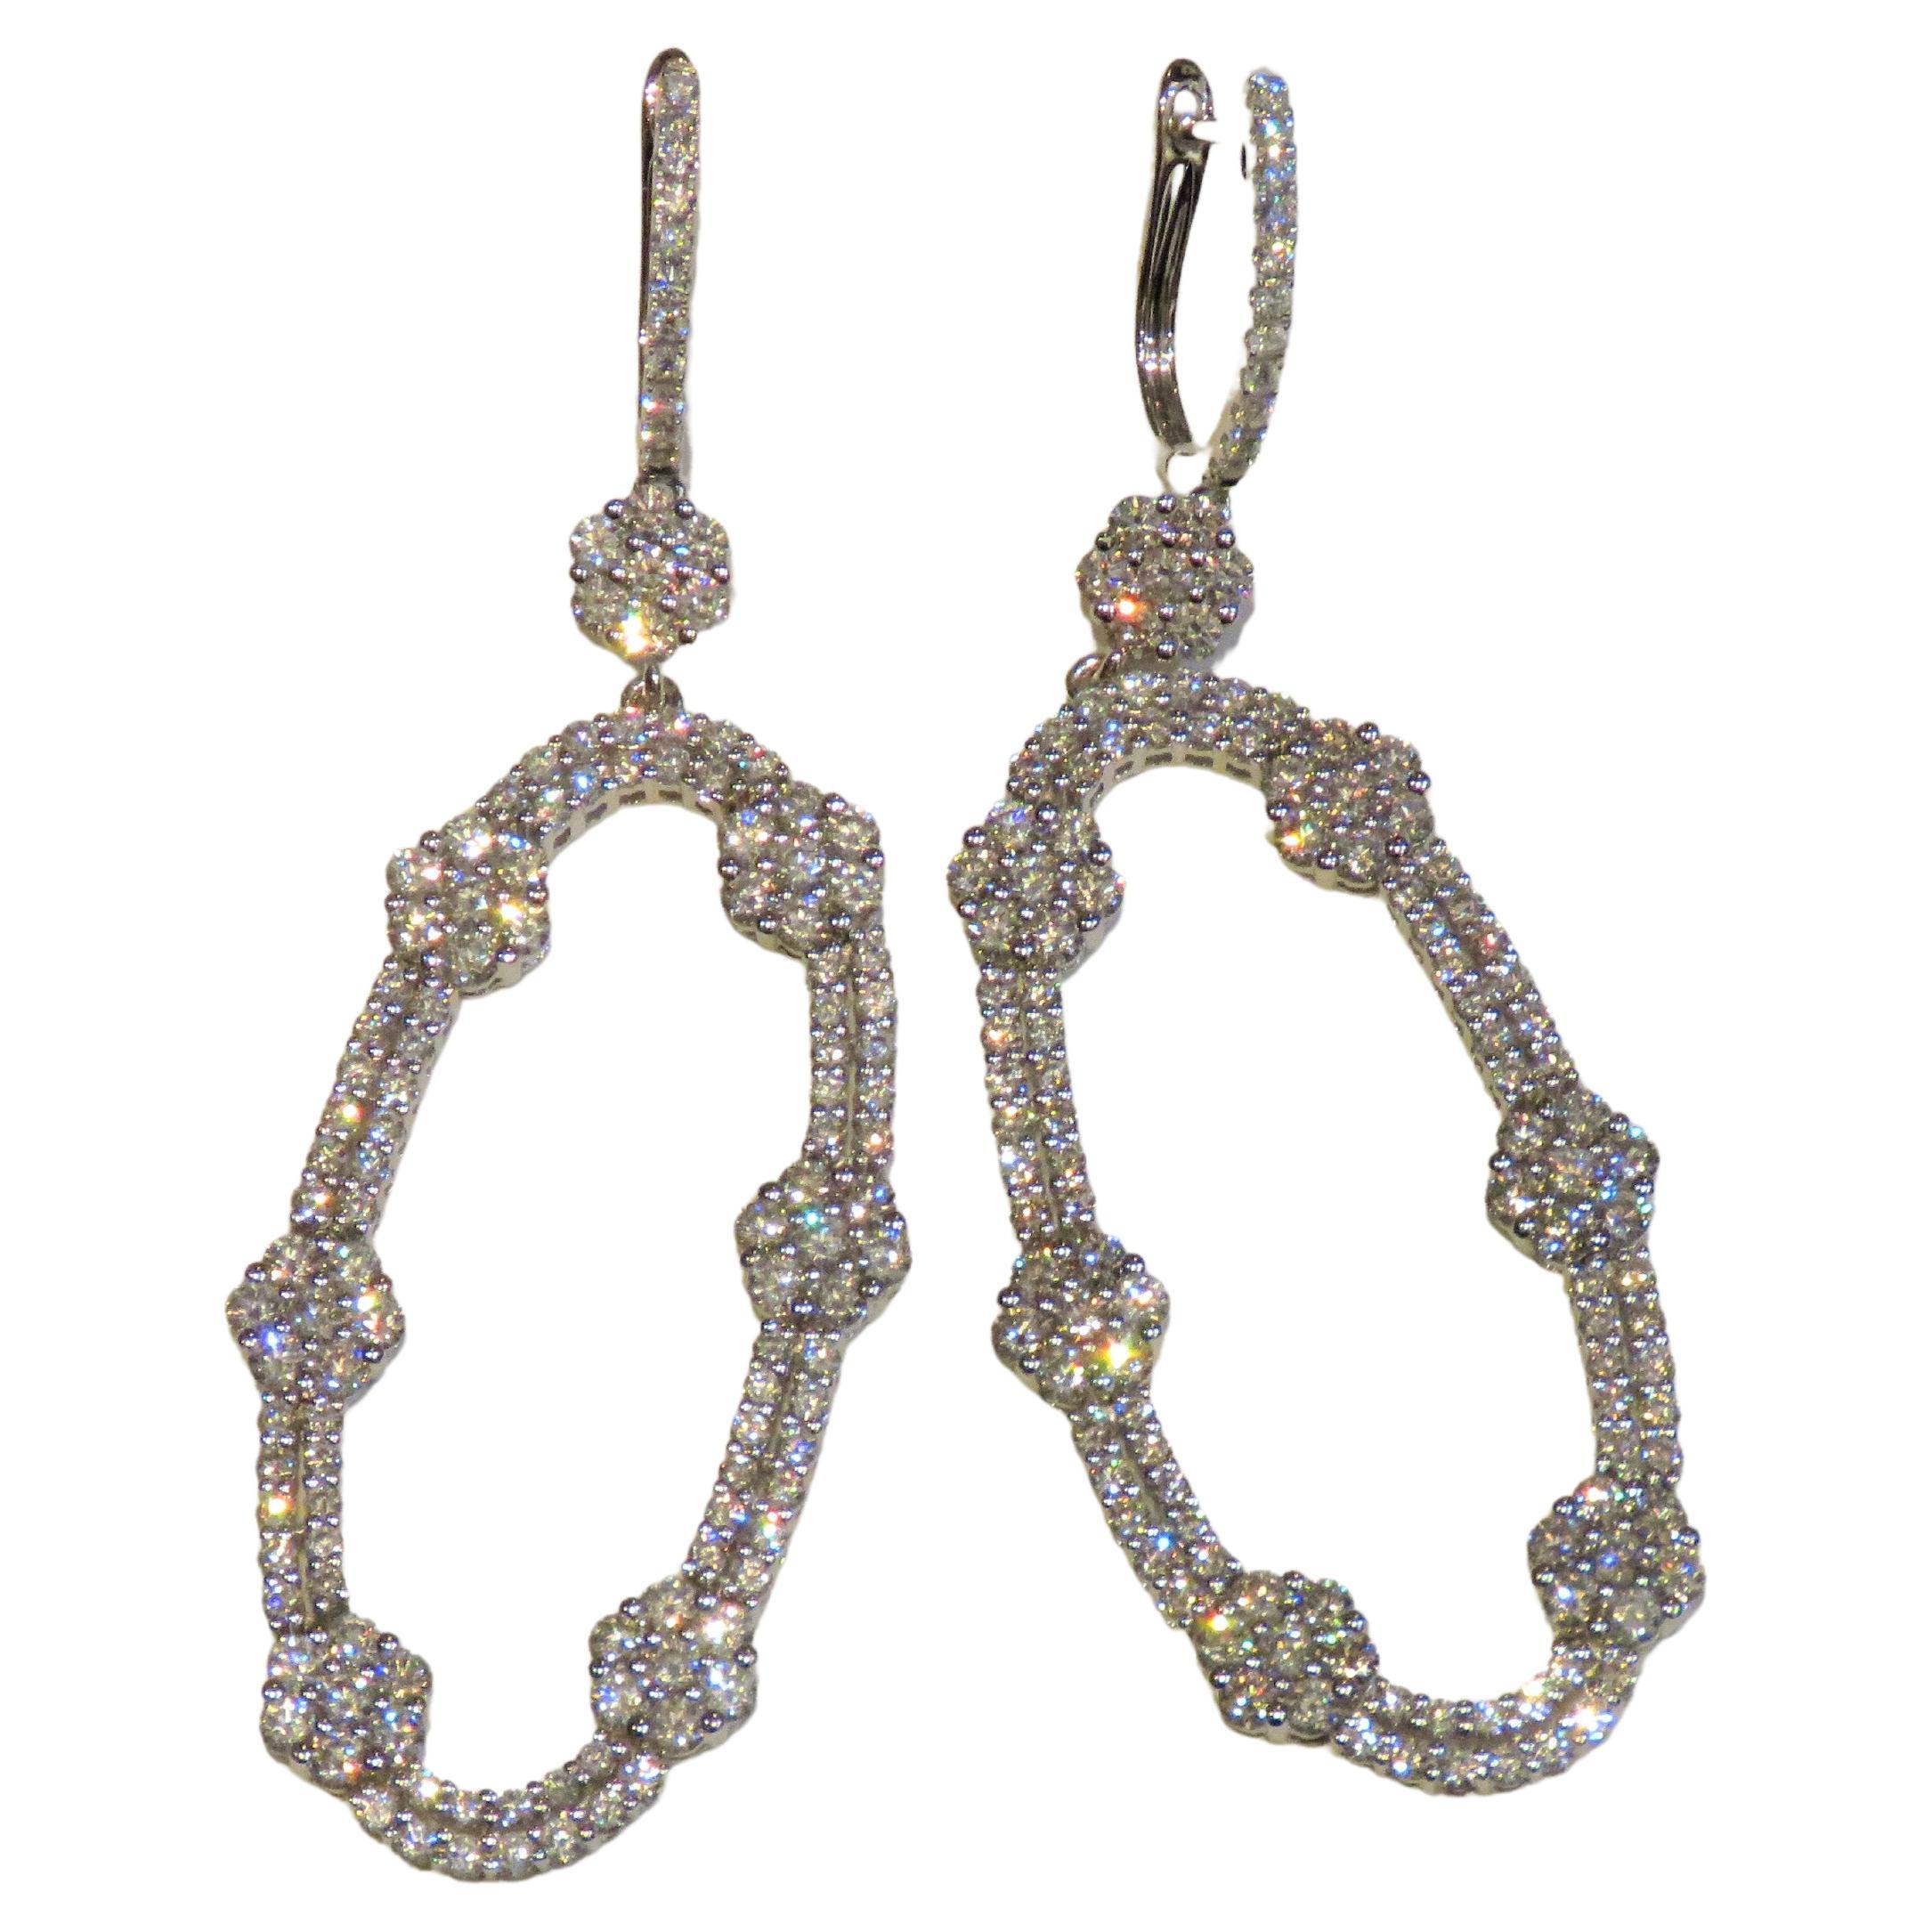 NWT $19,959 Or 18KT Rare Fancy Glittering Floral Flower Diamond Earrings (en anglais)